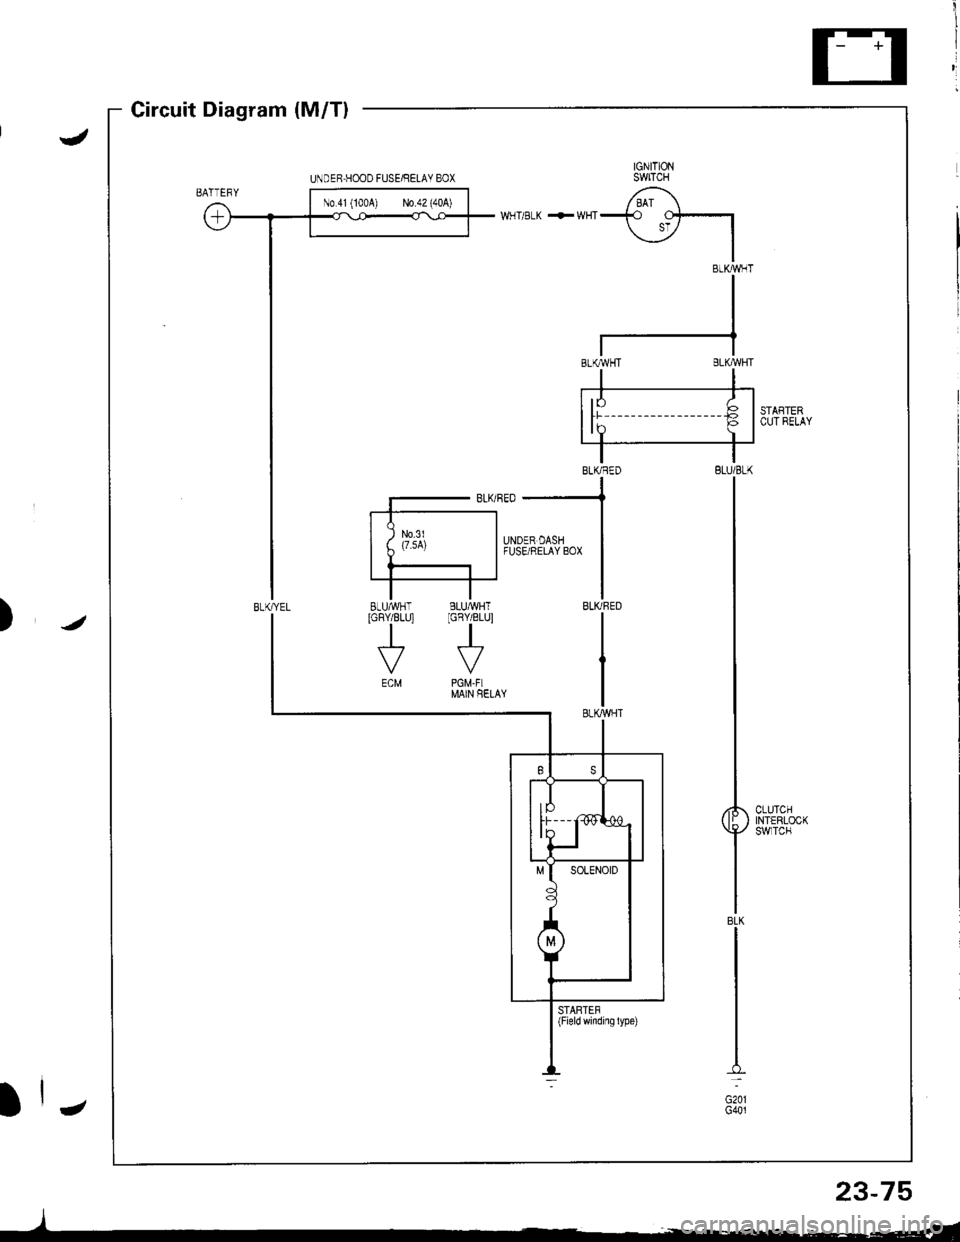 HONDA INTEGRA 1998 4.G Workshop Manual Circuit Diagram (M/Tl
tJ
STARTEBCUT RELAY
)/
ll-G2o1G401
rAa rtFz5- r3
) -rr
CLUTCHINTERLOCKSW]TCH
IGNITIONX SWITCH
!_*",.^-*-G-l
"T"
BTKWHT BLKWHT
llr - tr |
BLKFED 8LU/BLK
- BLK,BE I__-lrror.oo* 
I